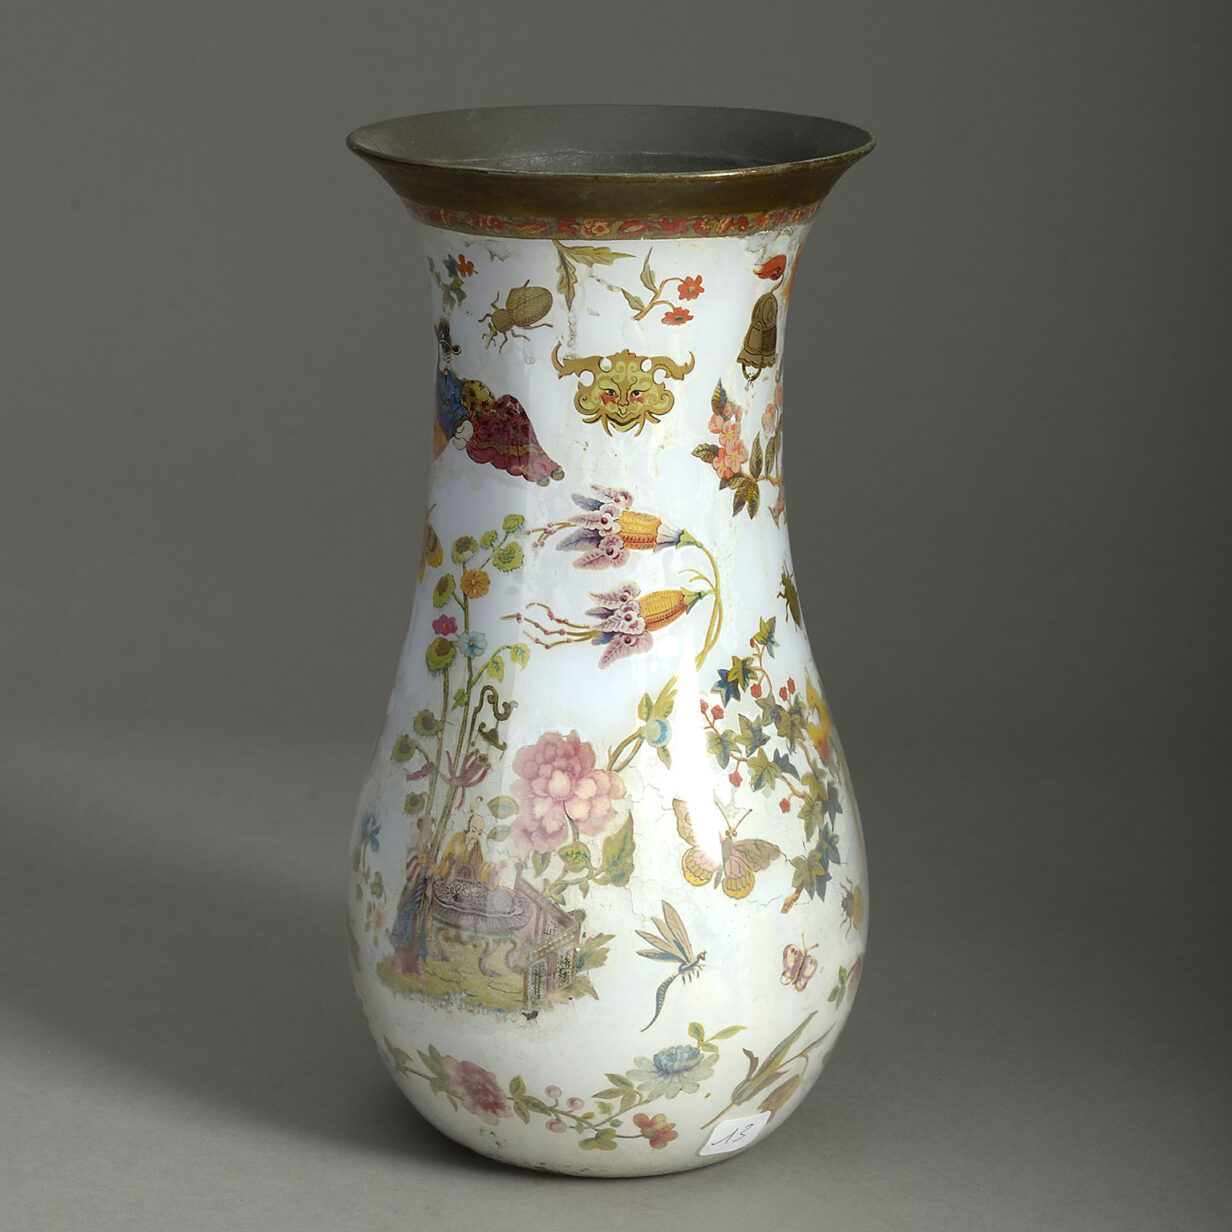 19th century decalcomania vase